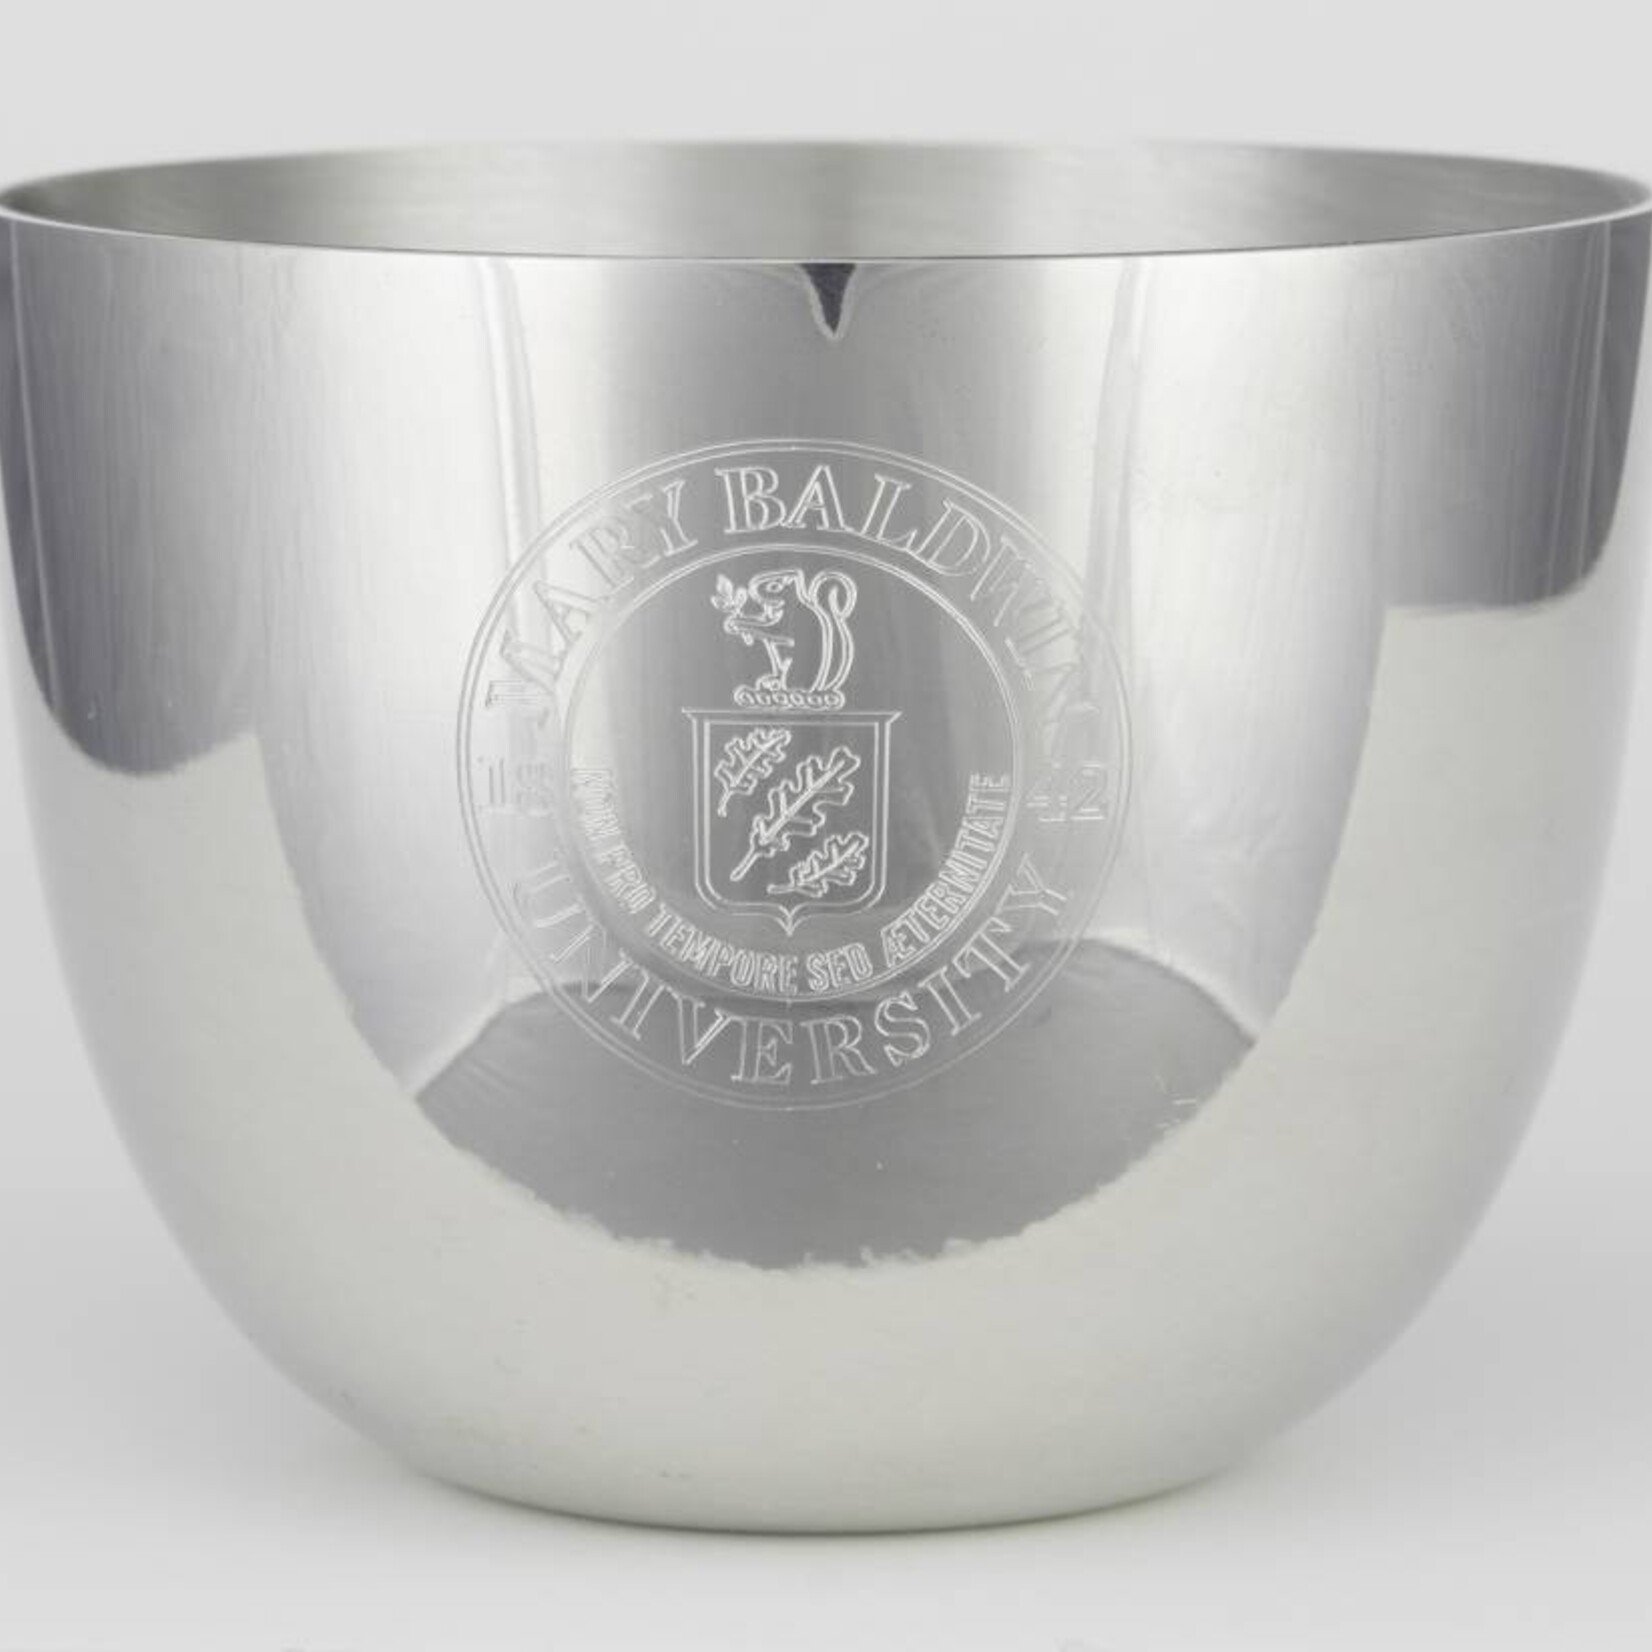 University Jefferson Cup